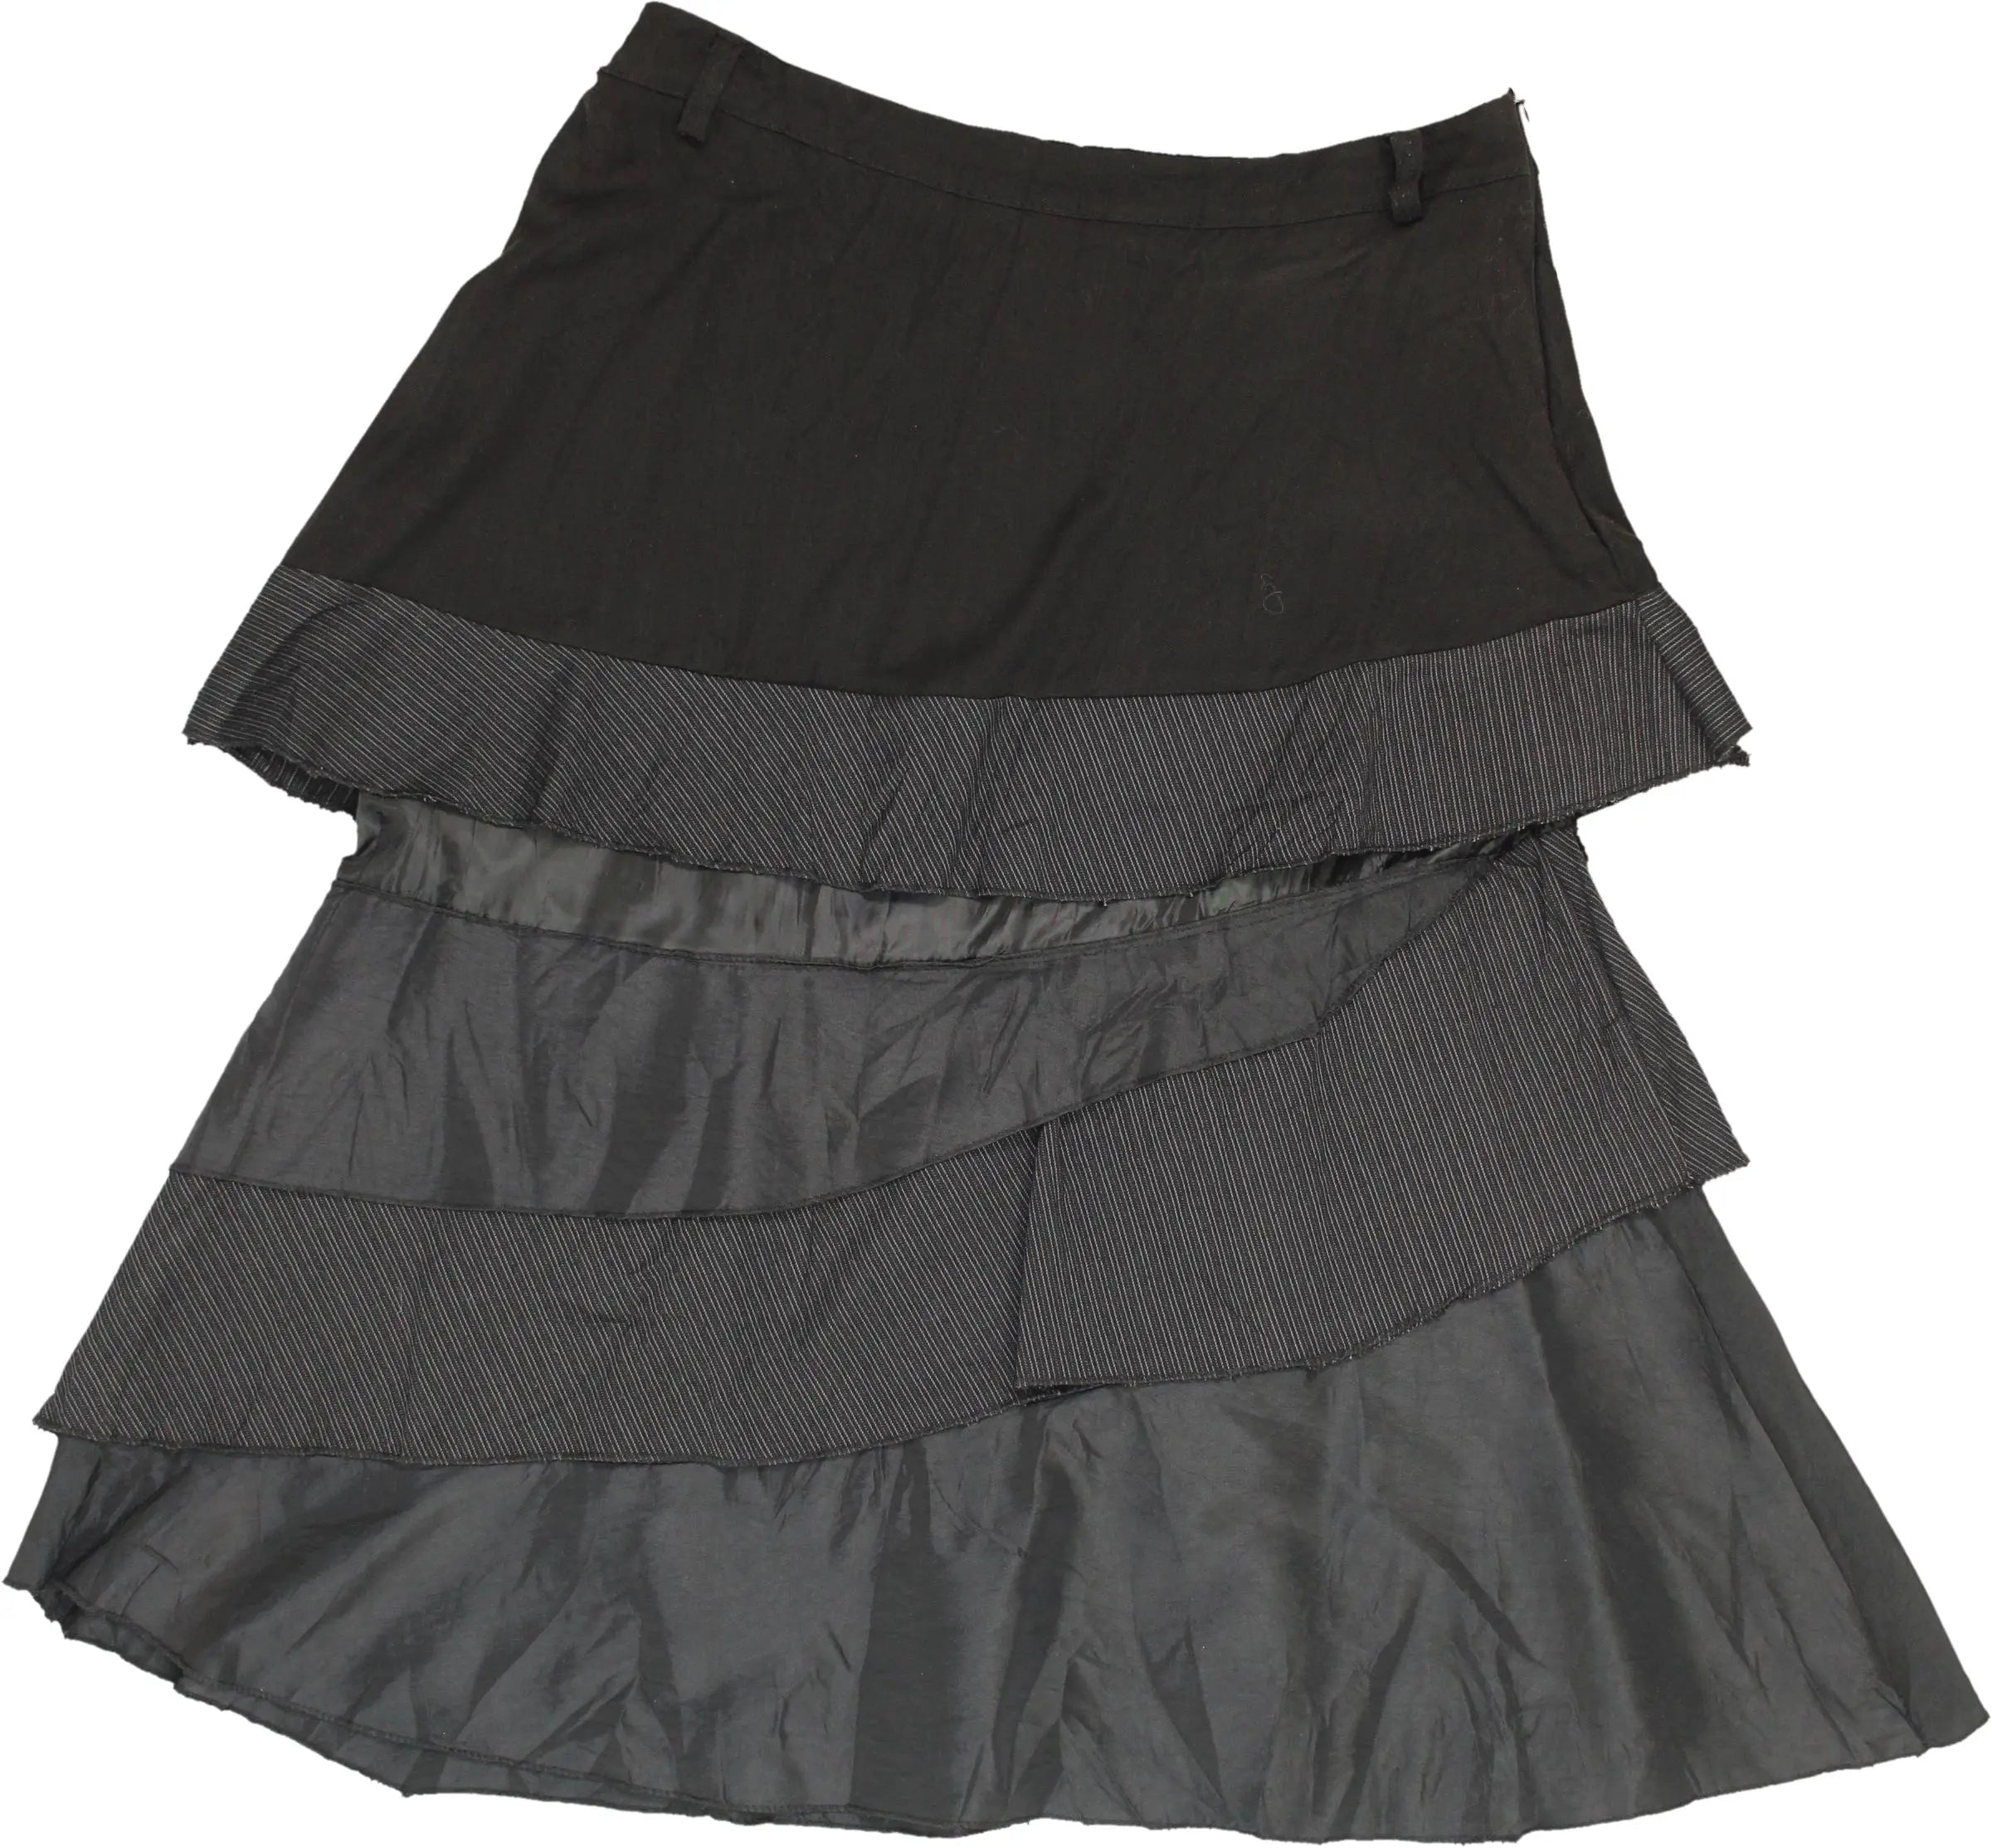 Pas de Quoi - Layer Skirt- ThriftTale.com - Vintage and second handclothing